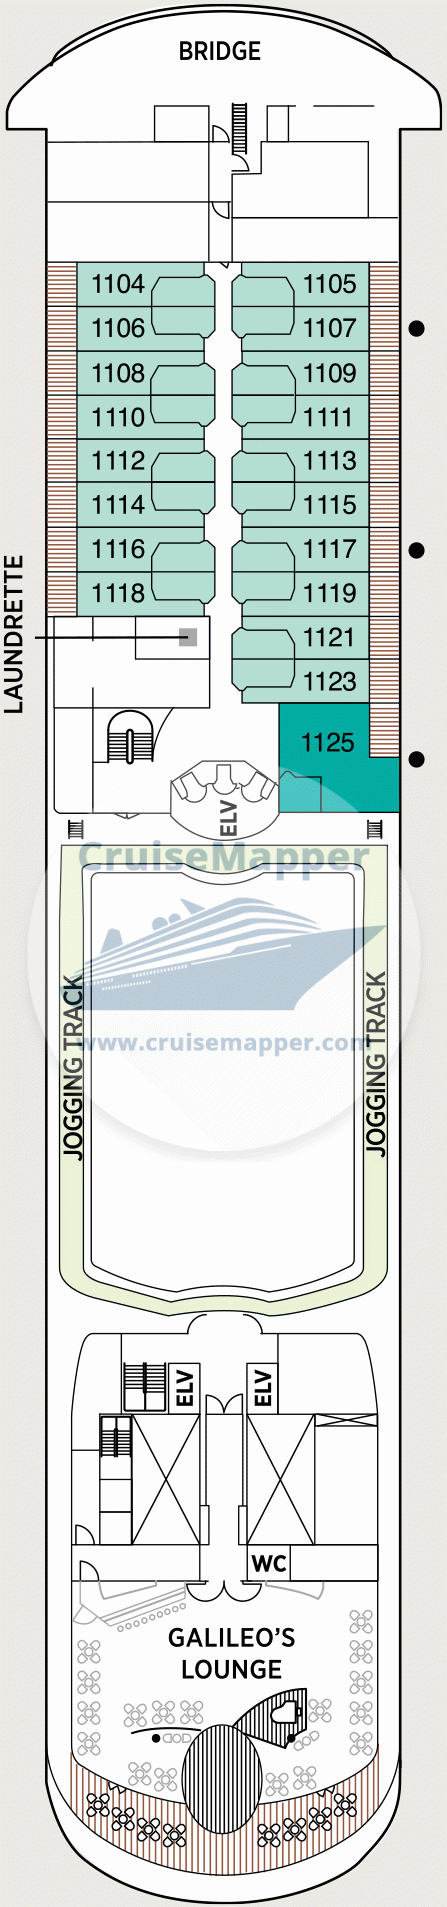 Seven Seas Navigator Deck 11 - Bridge-Cabins